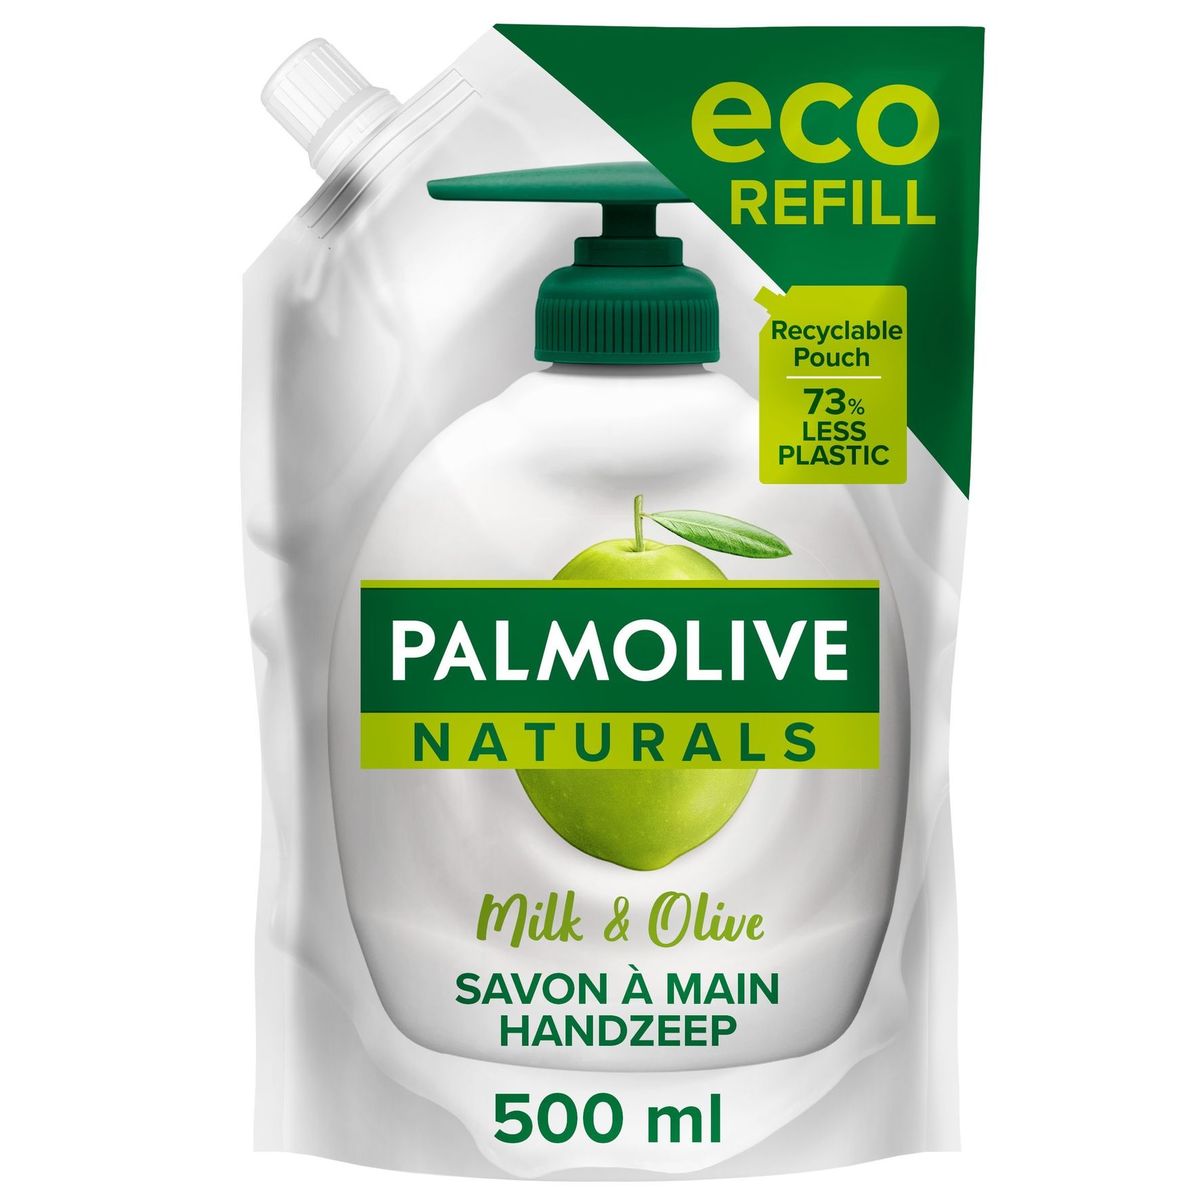 Palmolive Naturals Olive & Milk Handwash Cream - Eco Refill 500ml